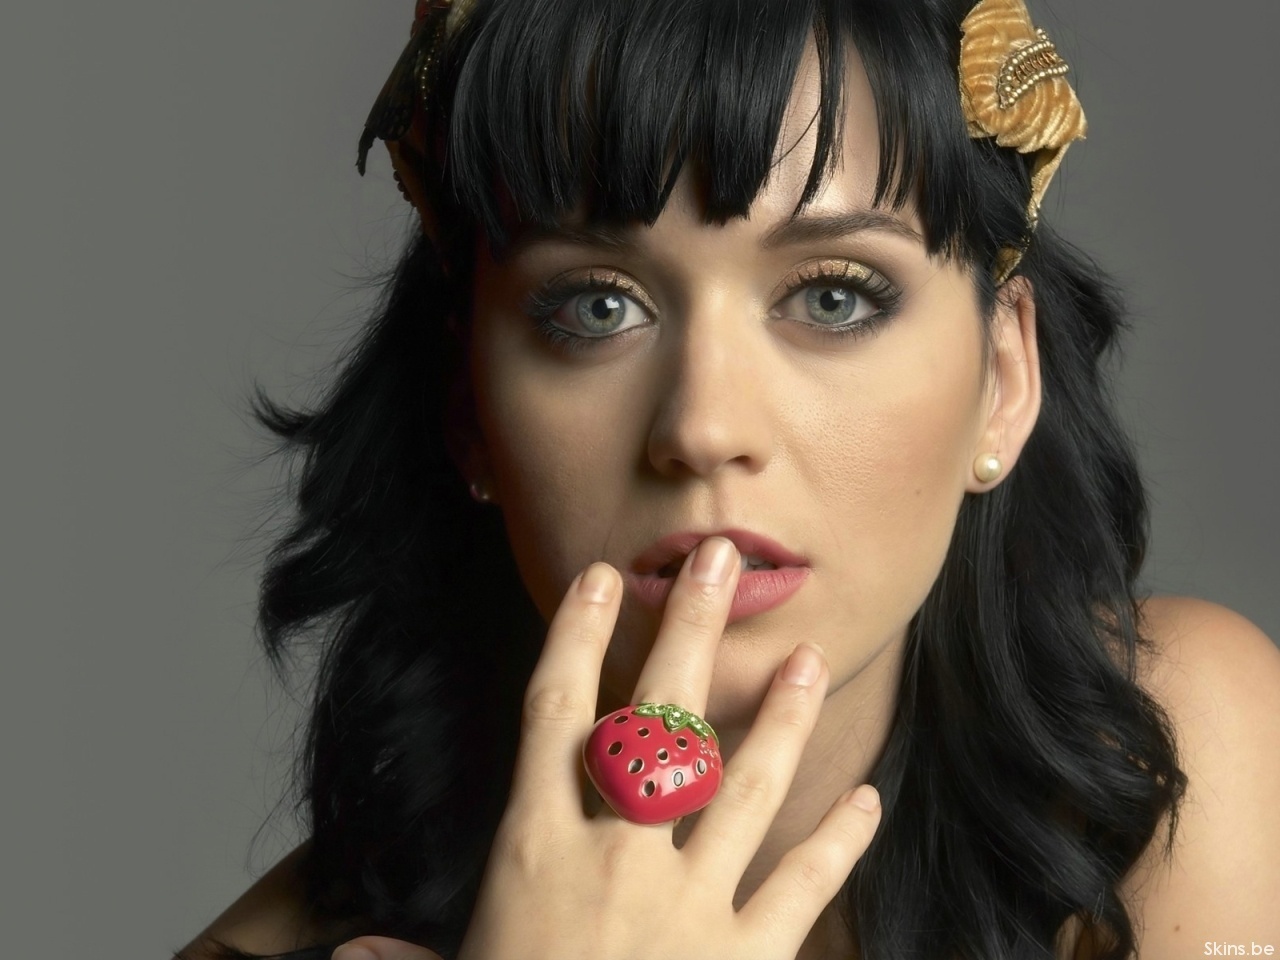   - Katy Perry Katy perry